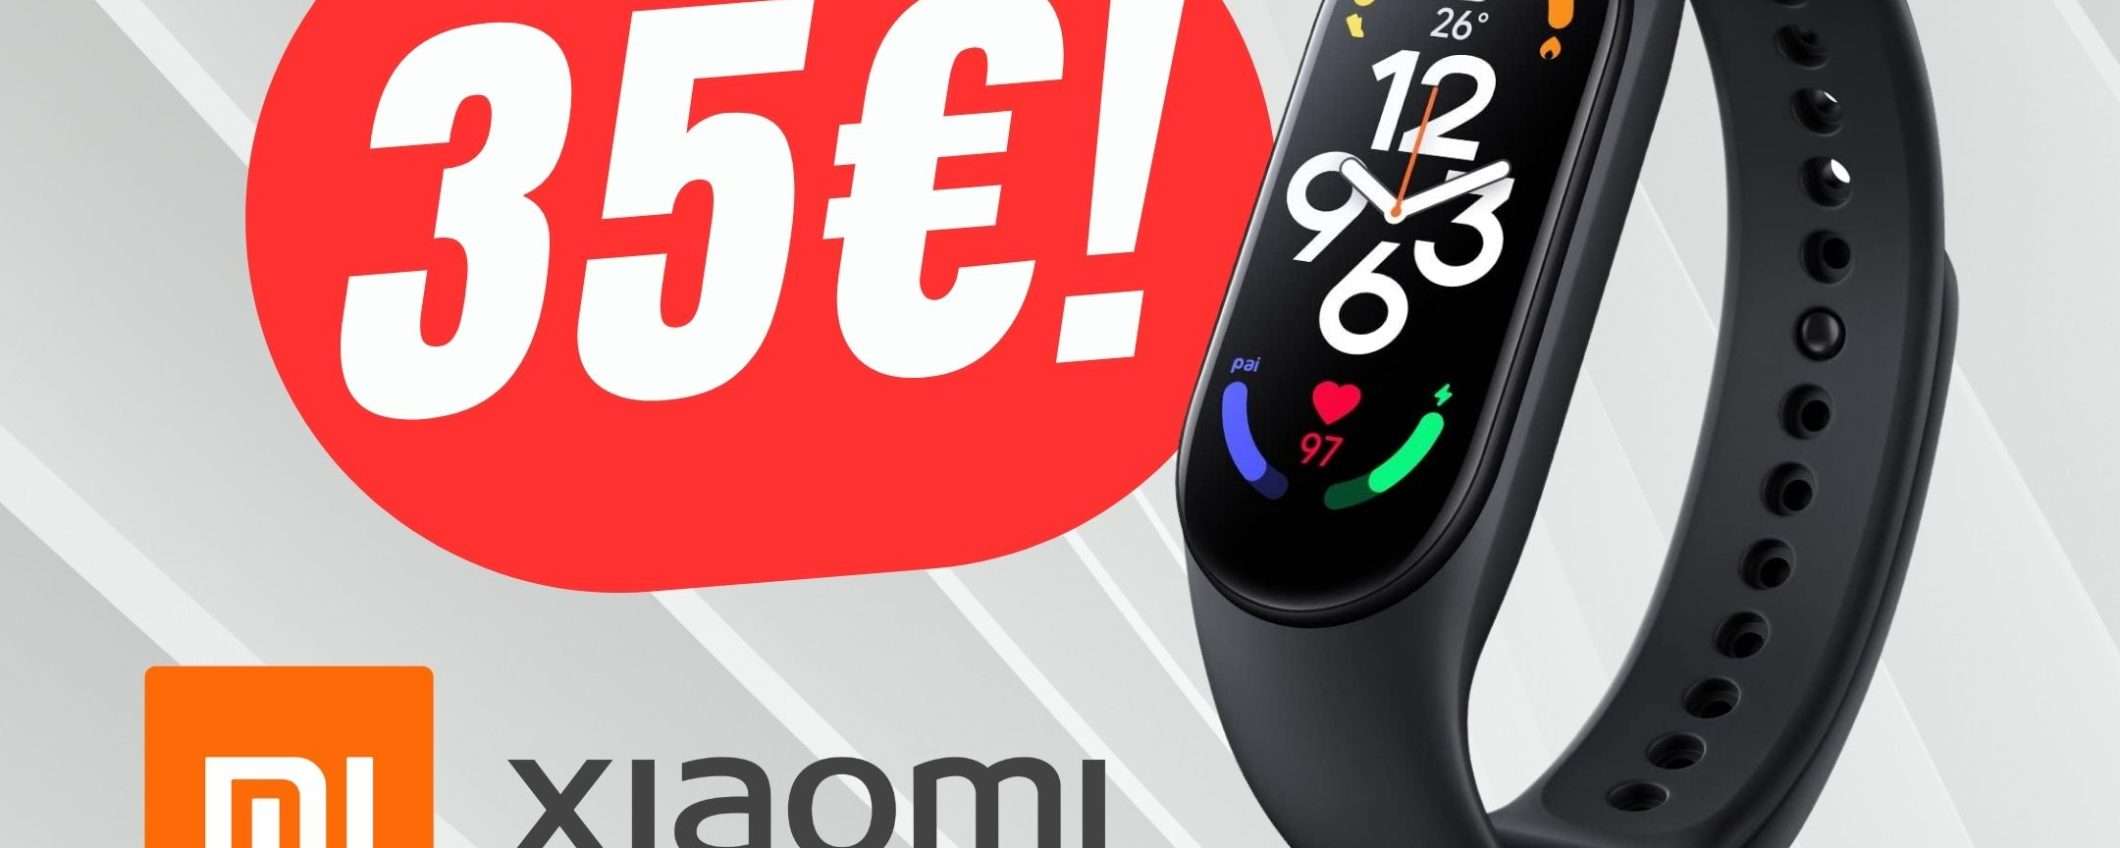 Xiaomi Mi Smart Band 7 COSTA 35€ grazie all'OFFERTA Amazon